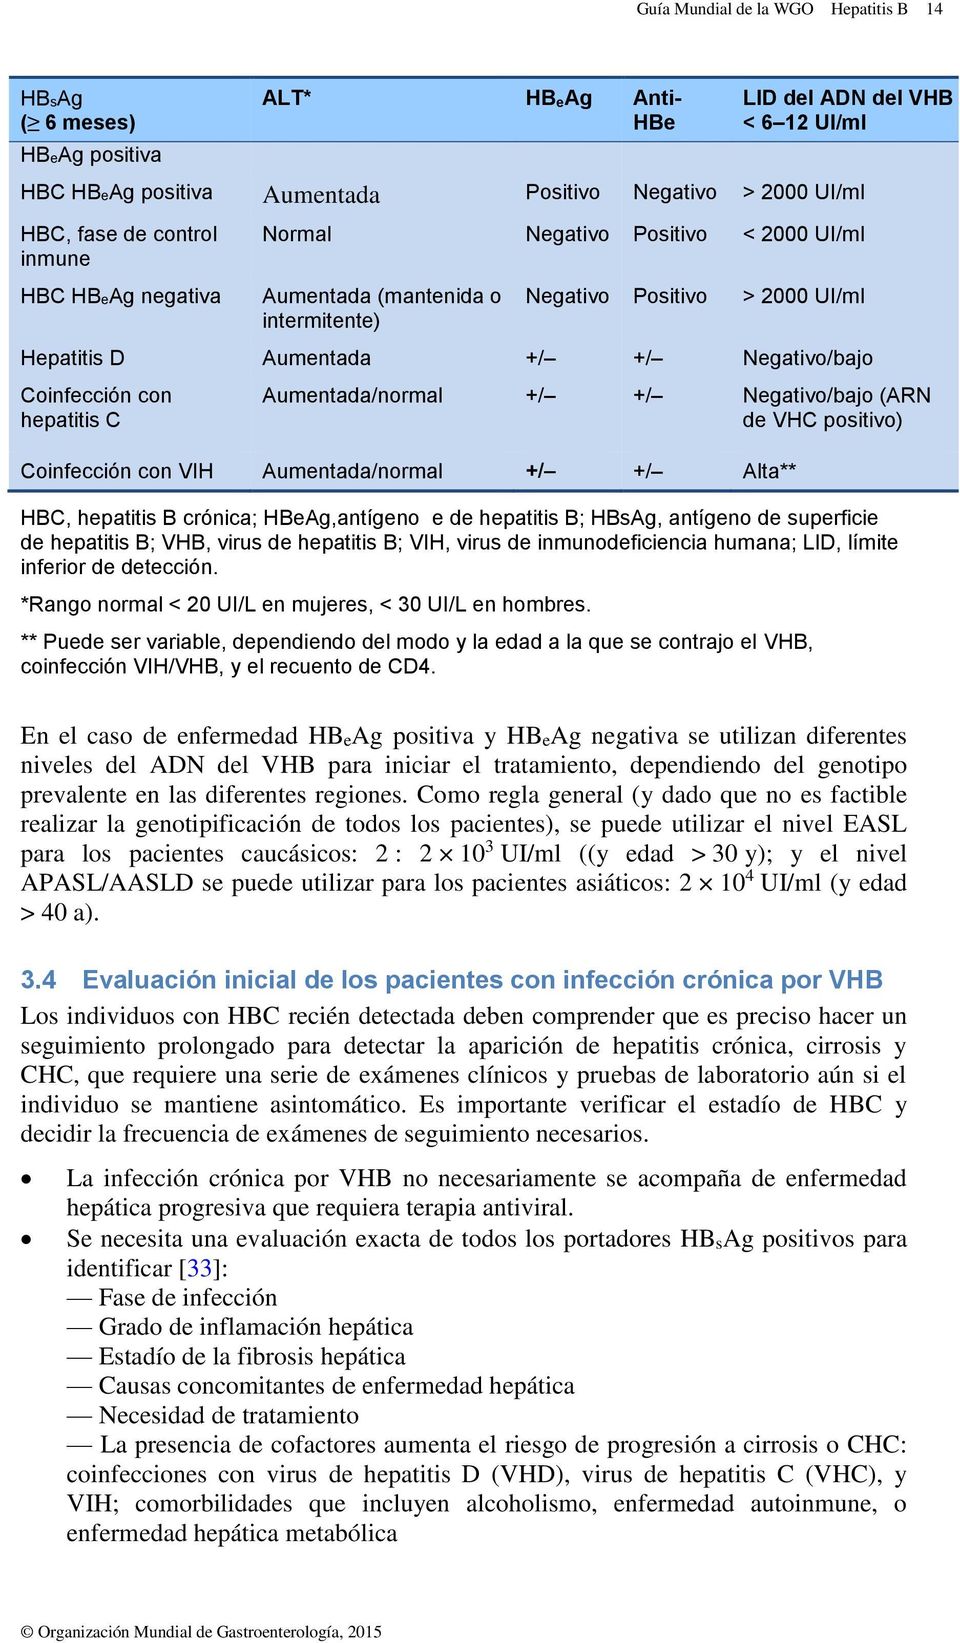 hepatitis C Aumentada/normal +/ +/ Negativo/bajo (ARN de VHC positivo) Coinfección con VIH Aumentada/normal +/ +/ Alta** HBC, hepatitis B crónica; HBeAg,antígeno e de hepatitis B; HBsAg, antígeno de